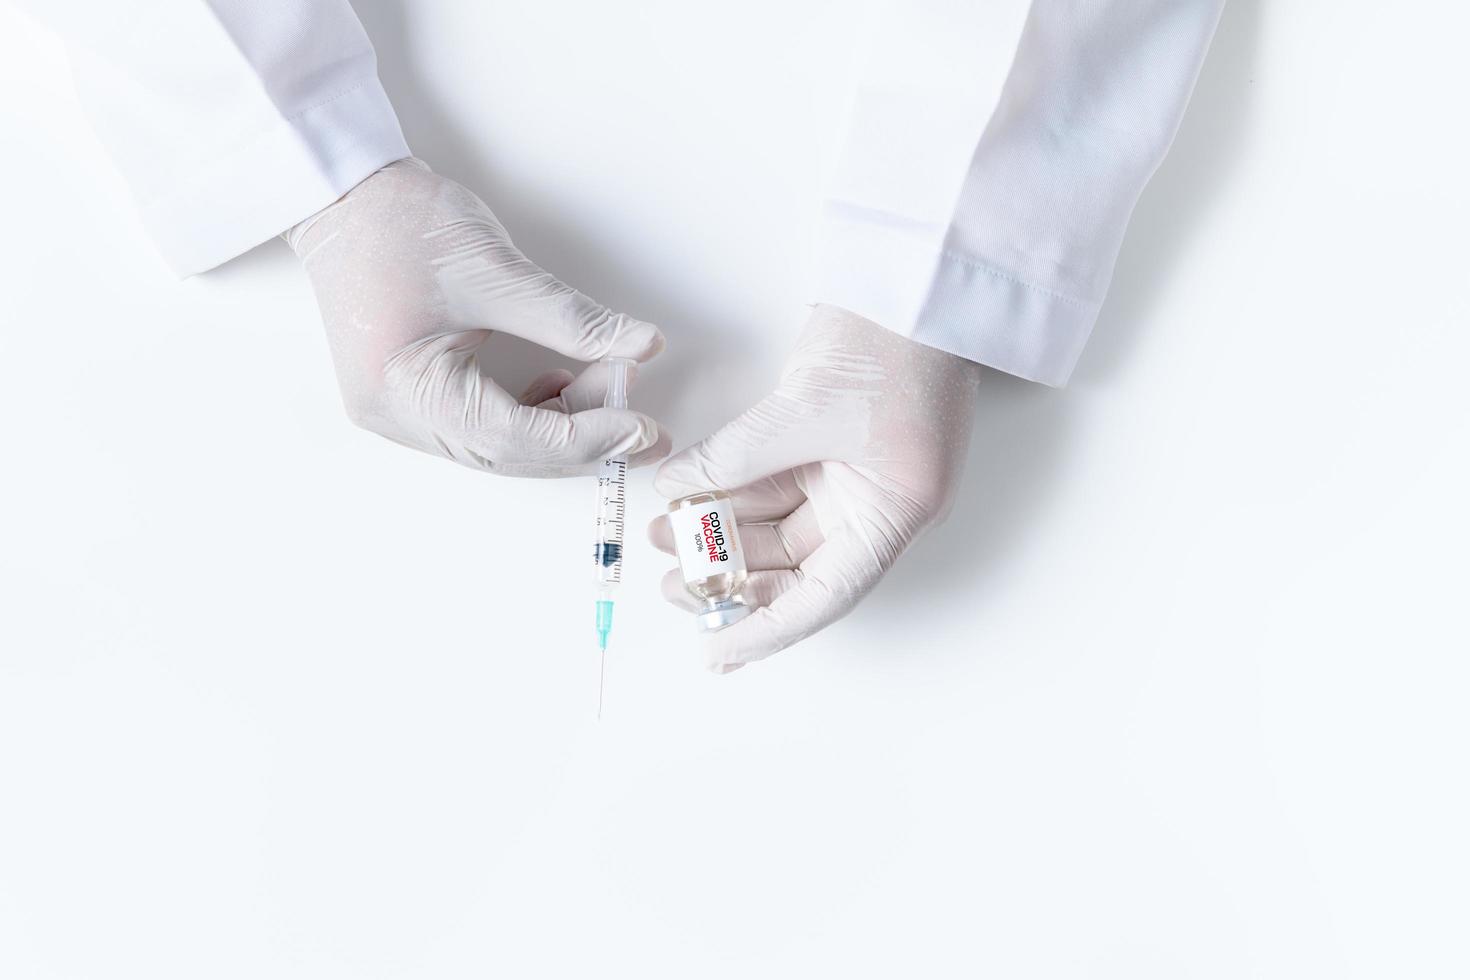 Doctor or scientist hand in white gloves holding flu, measles, coronavirus vaccine shot photo